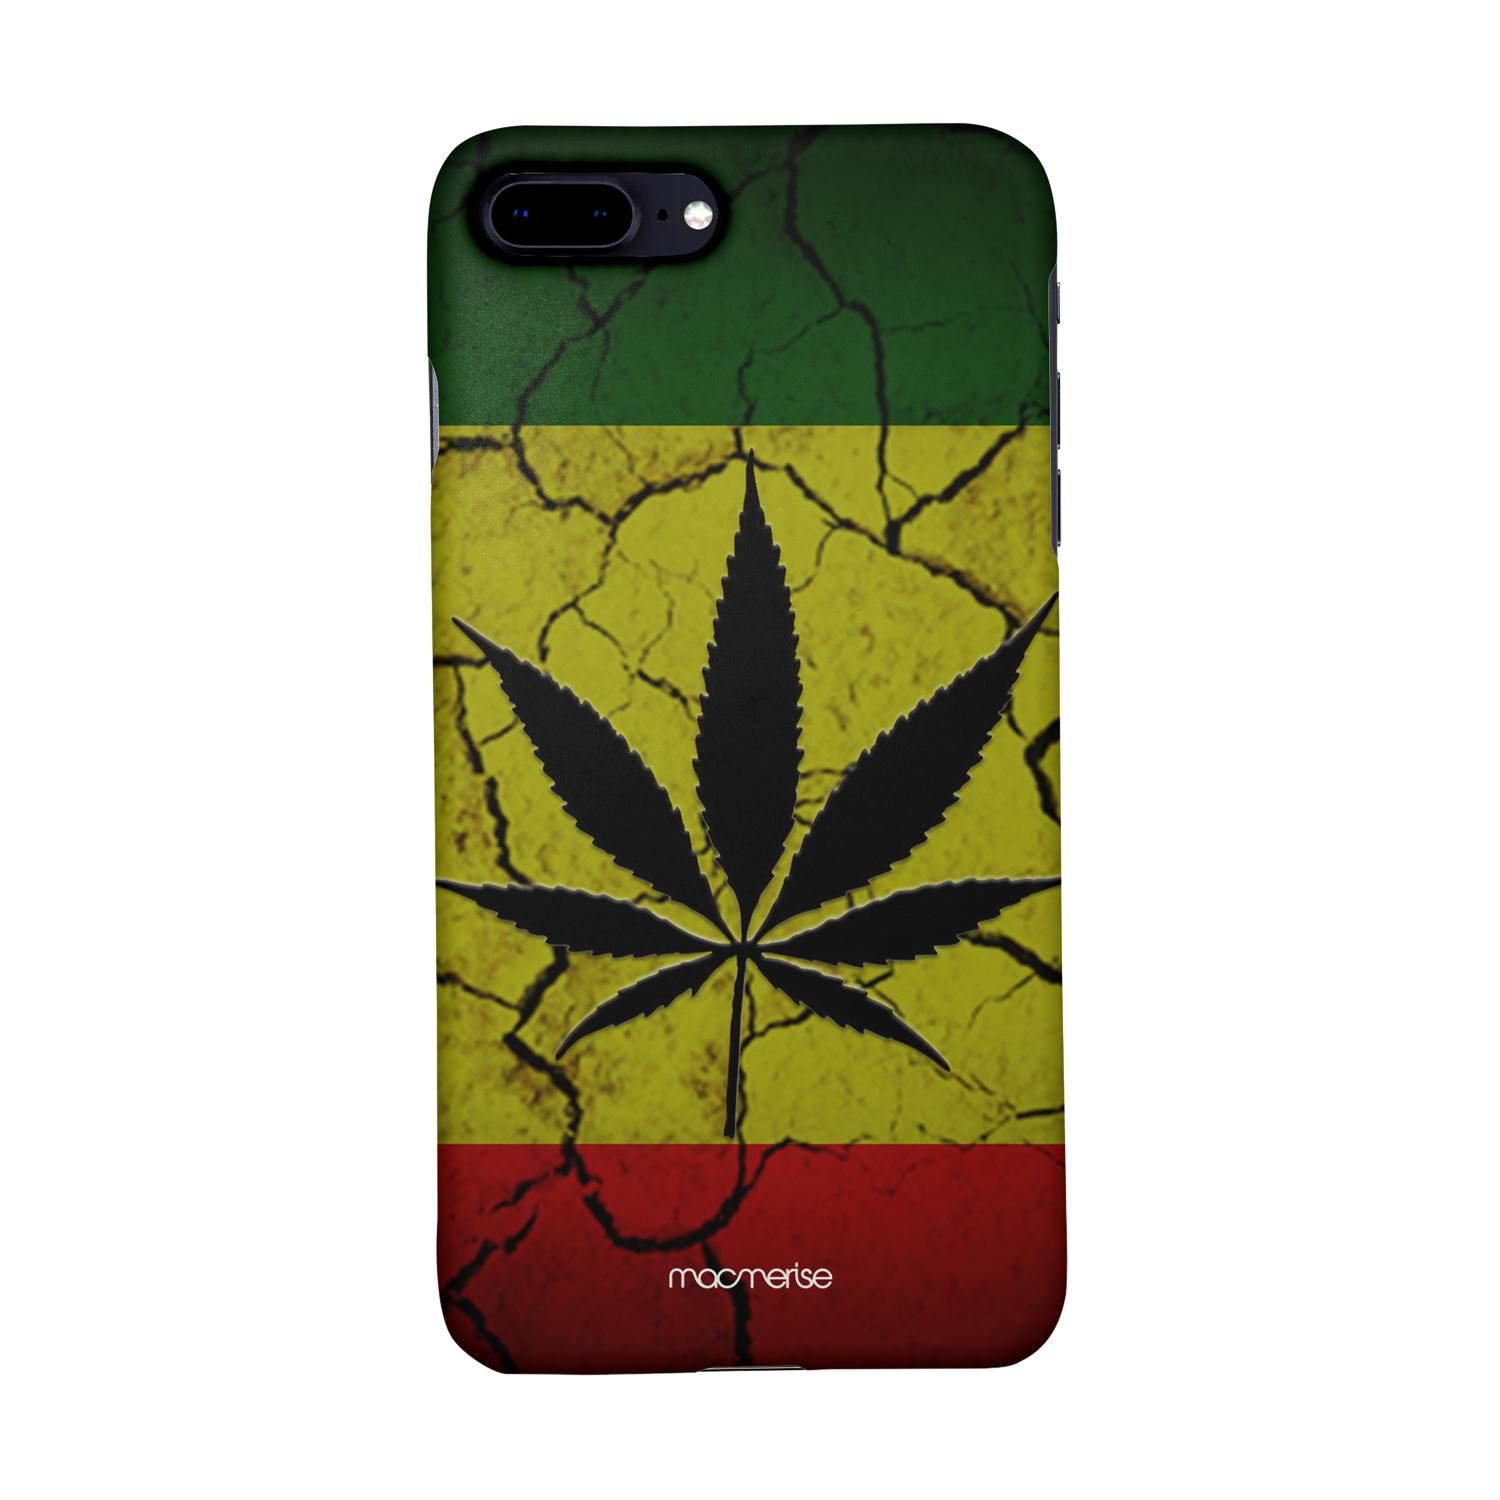 Buy Rastafari - Sleek Phone Case for iPhone 8 Plus Online